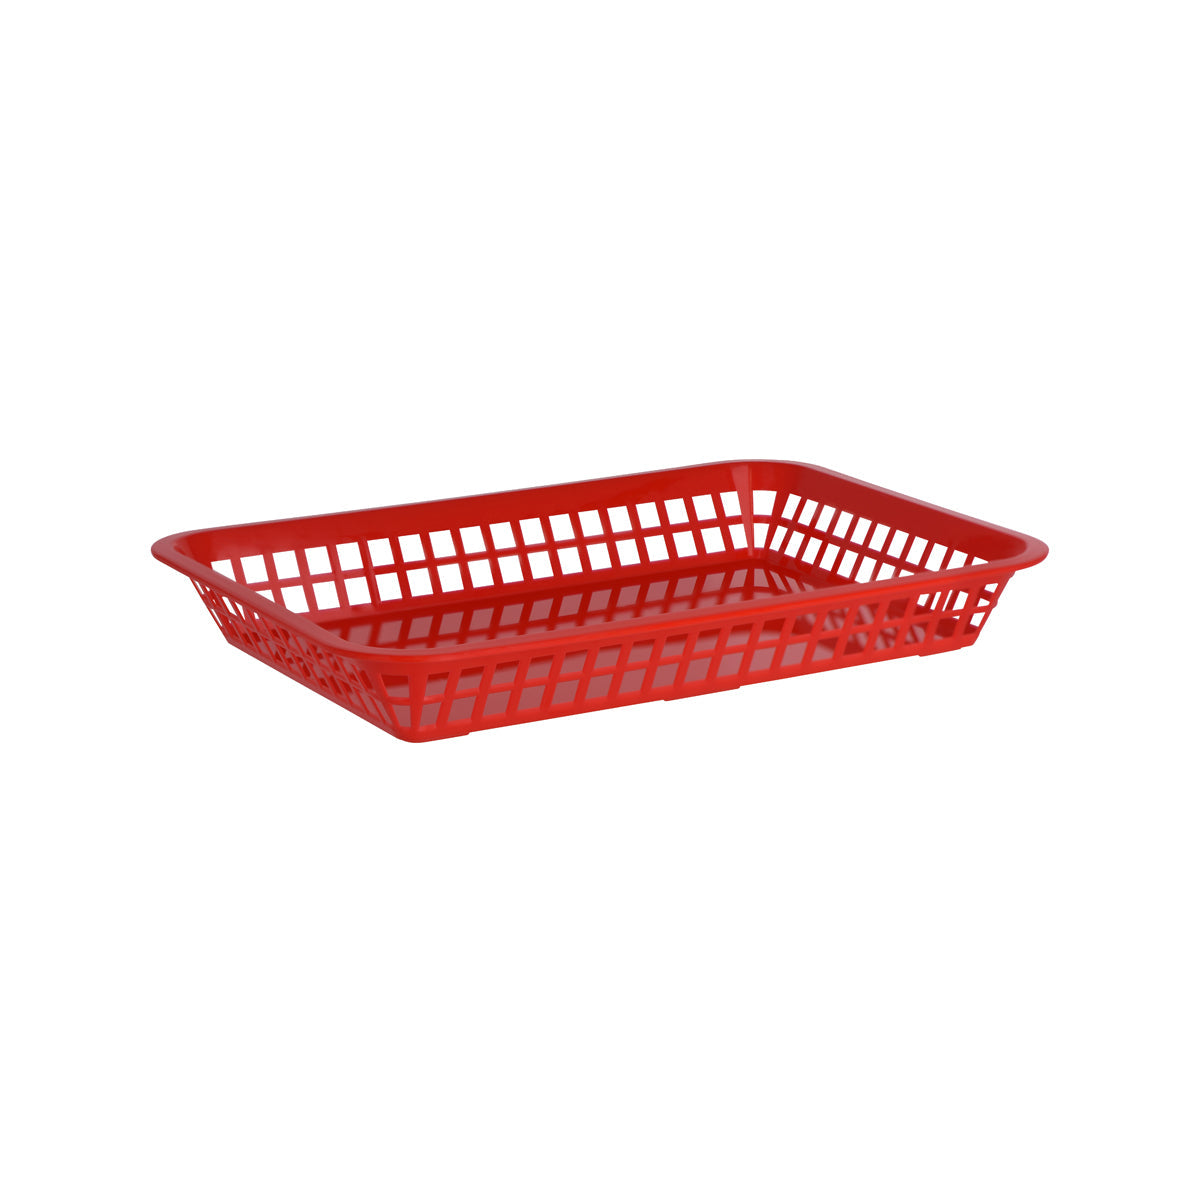 78697 Chef Inox Coney Island Rectangular Basket Plastic Red 300x215mm Tomkin Australia Hospitality Supplies